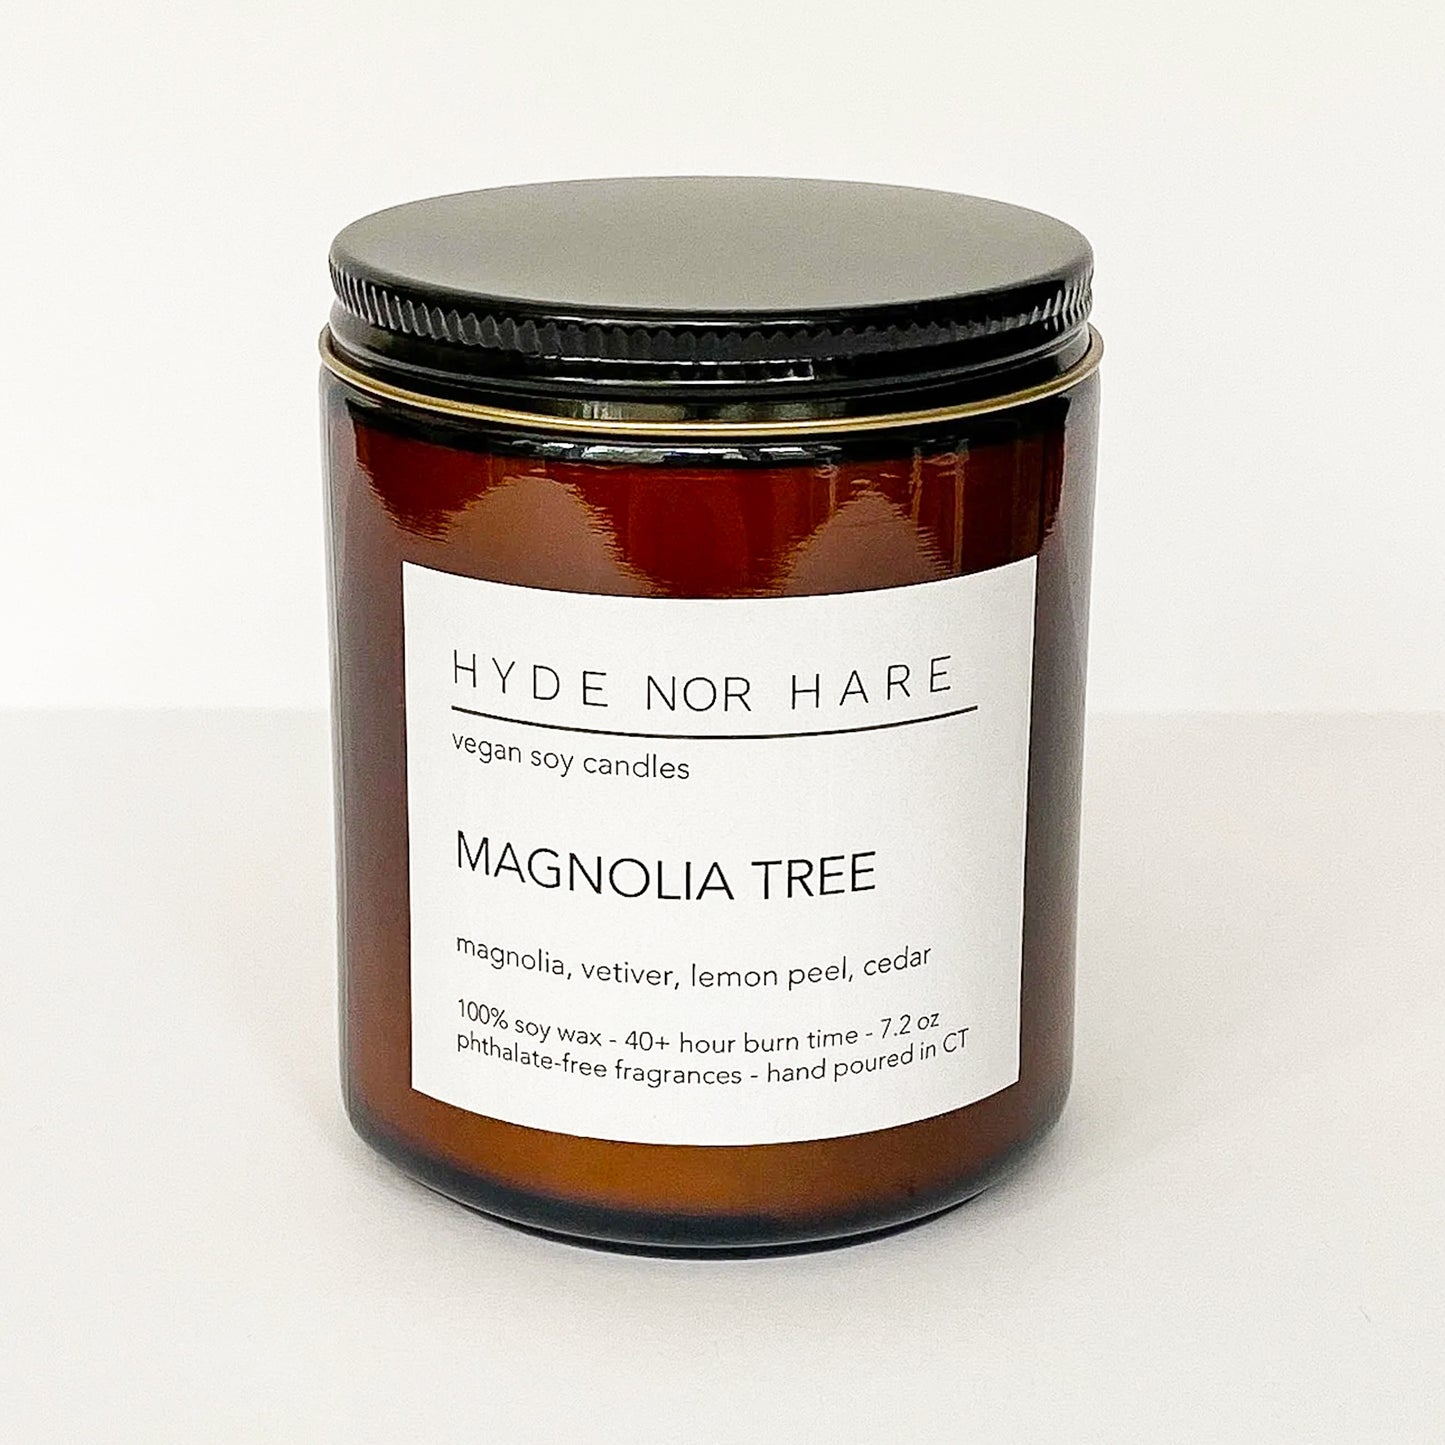 Hyde Nor Hare Magnolia Tree Candle